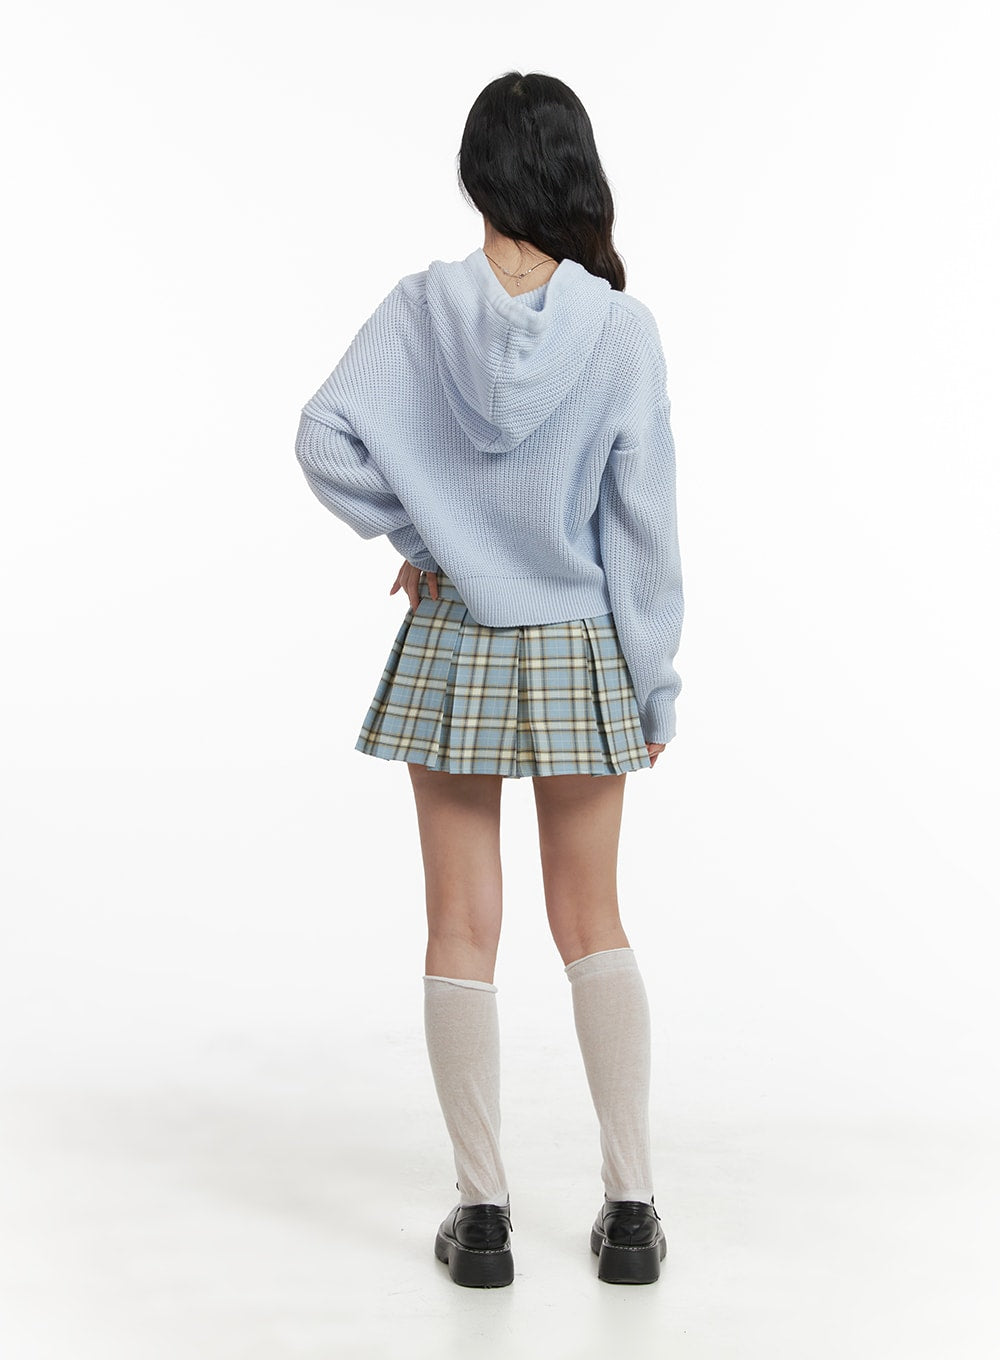 checkered-pleated-mini-skirt-om425